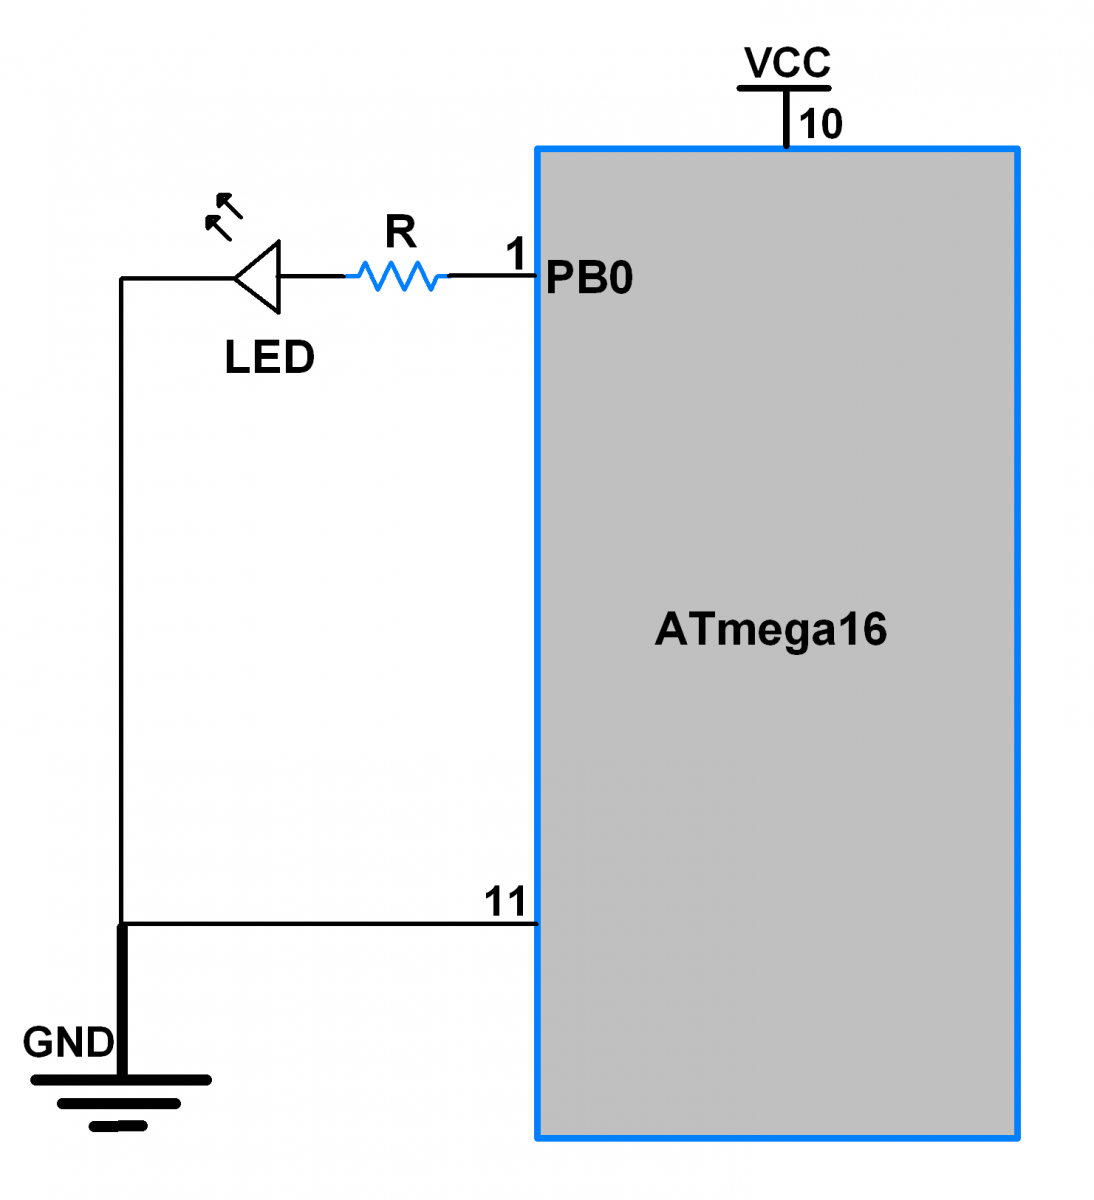 ATmega16 and LED connection diagram